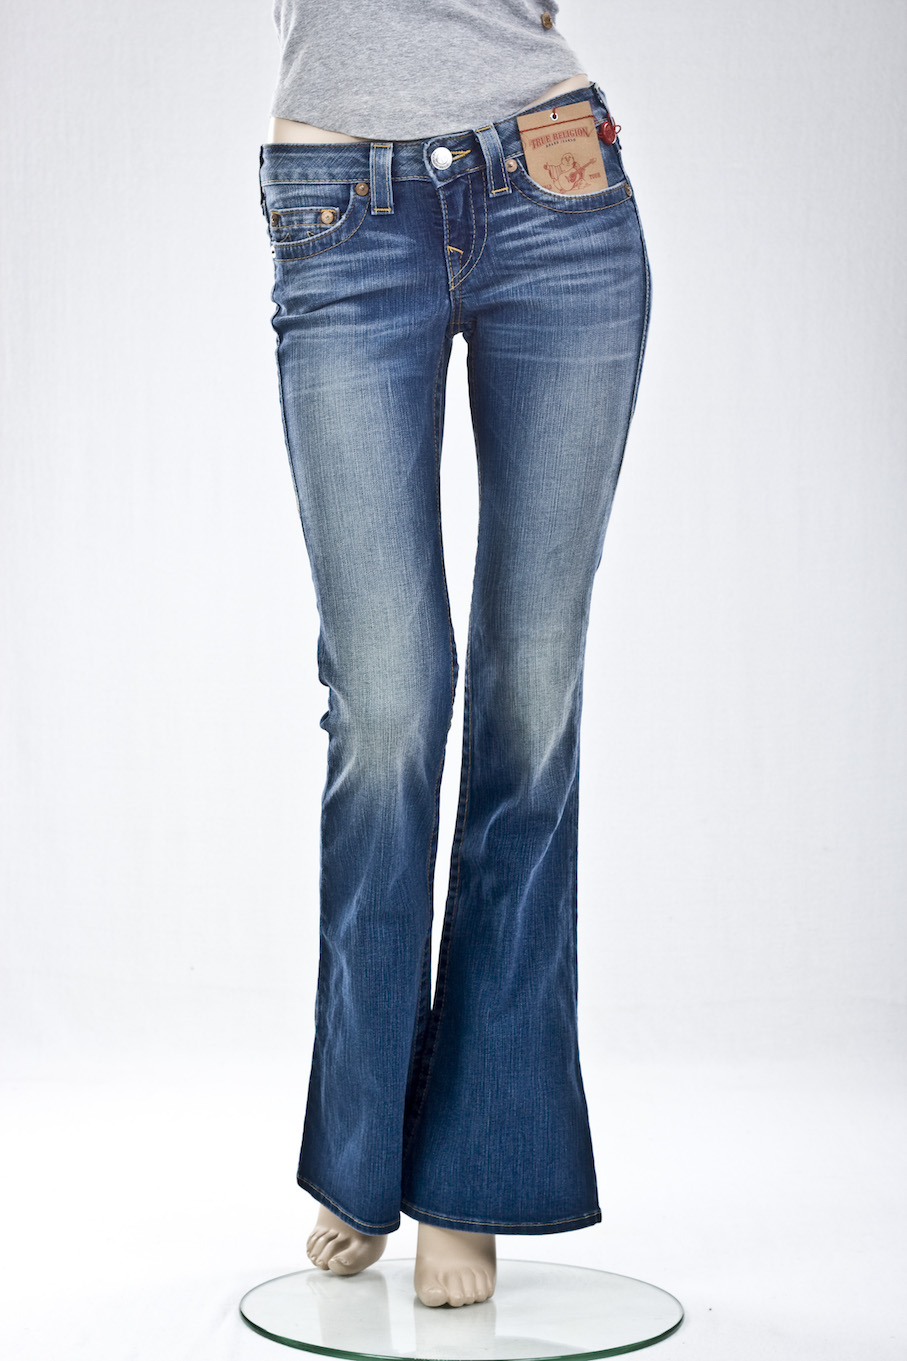 Женские джинсы True Religion "Клеш" Carrie Bootcut Jeans интернет-магазин Fashion Jeans